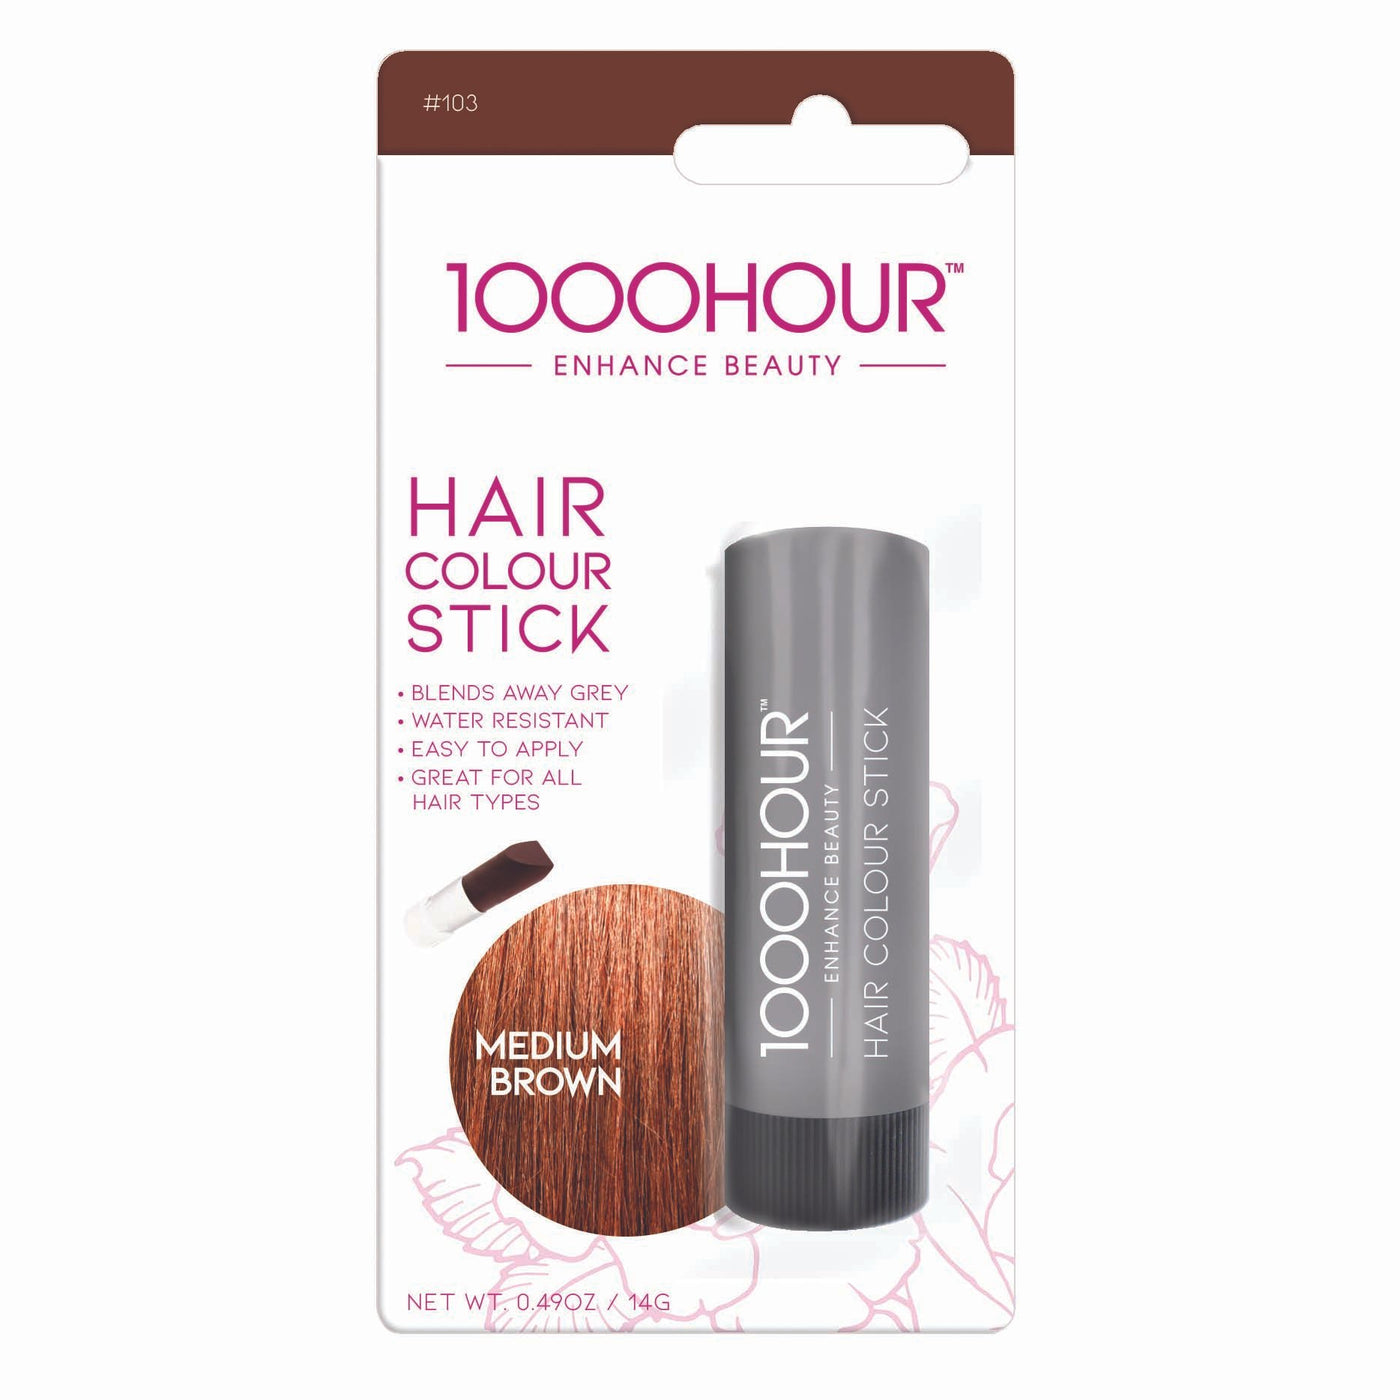 1000 Hour Hair Colour Stick Medium Brown - Hey Sara